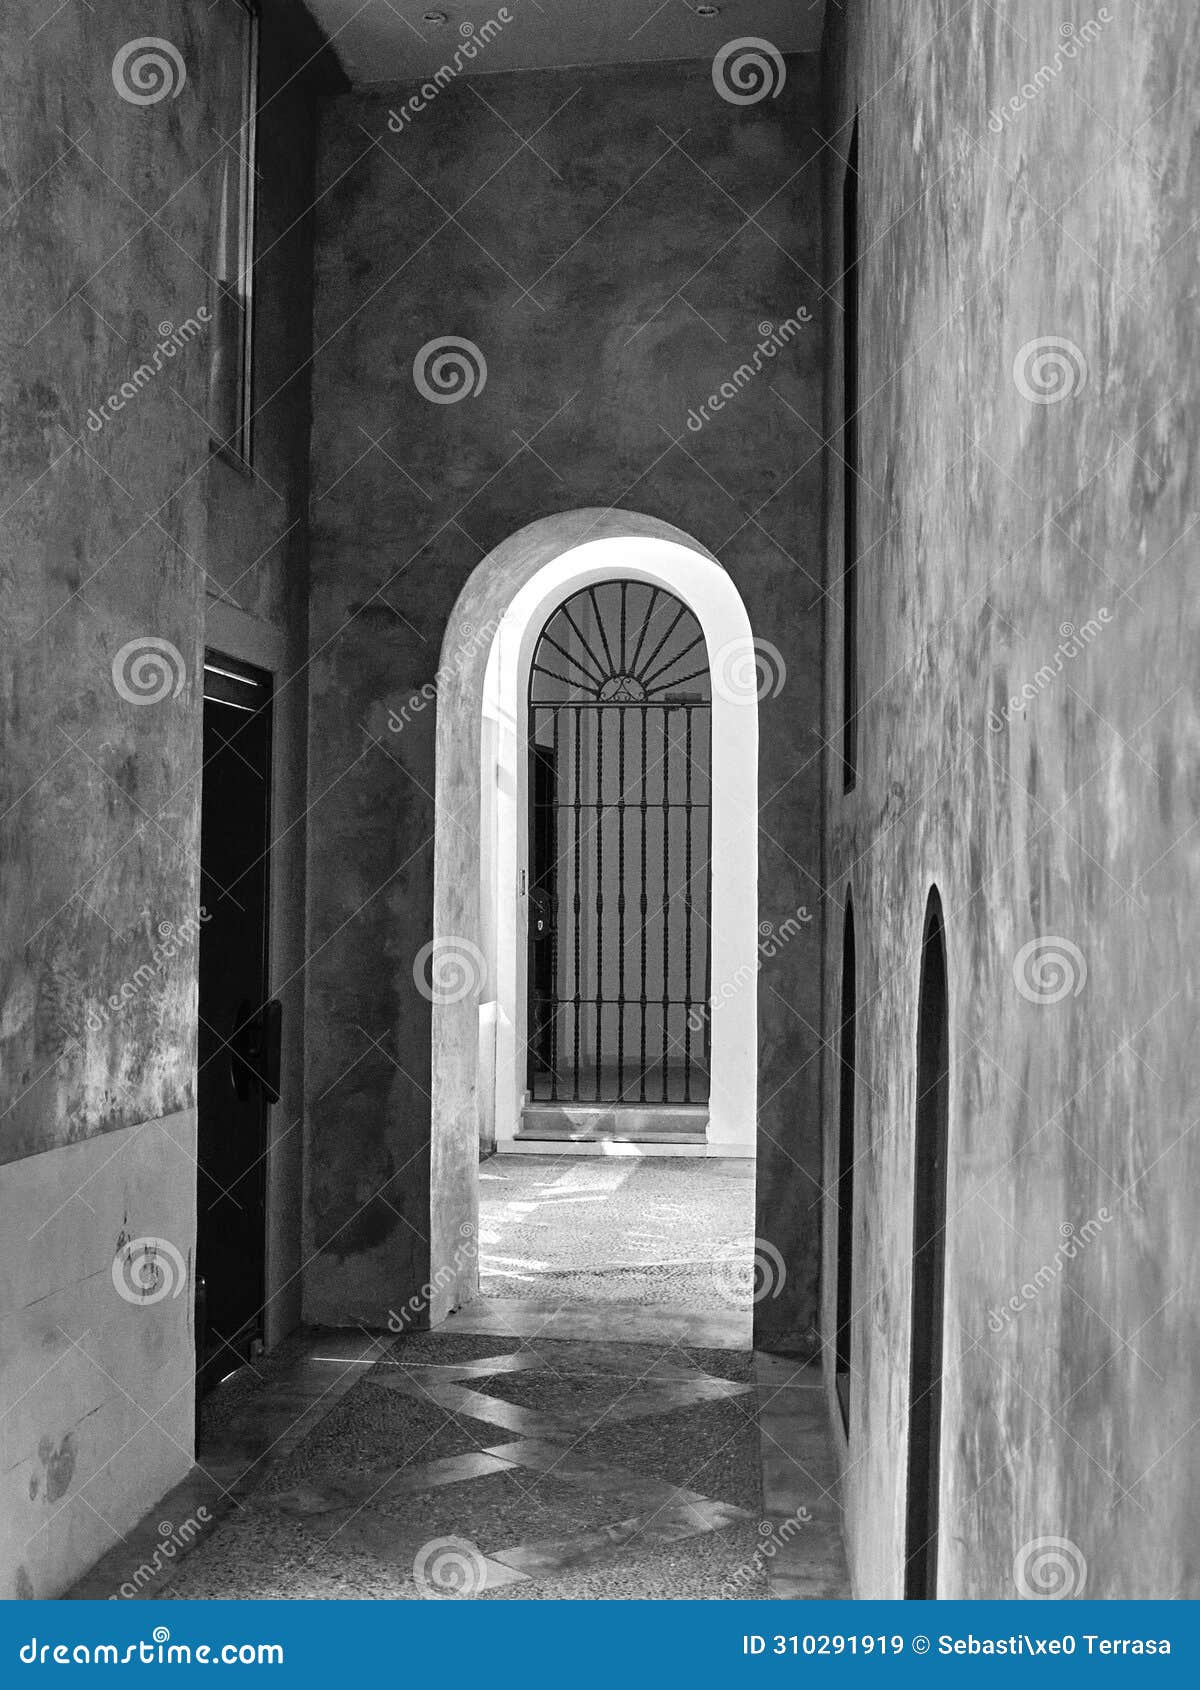 hallways, walls, doors and arches